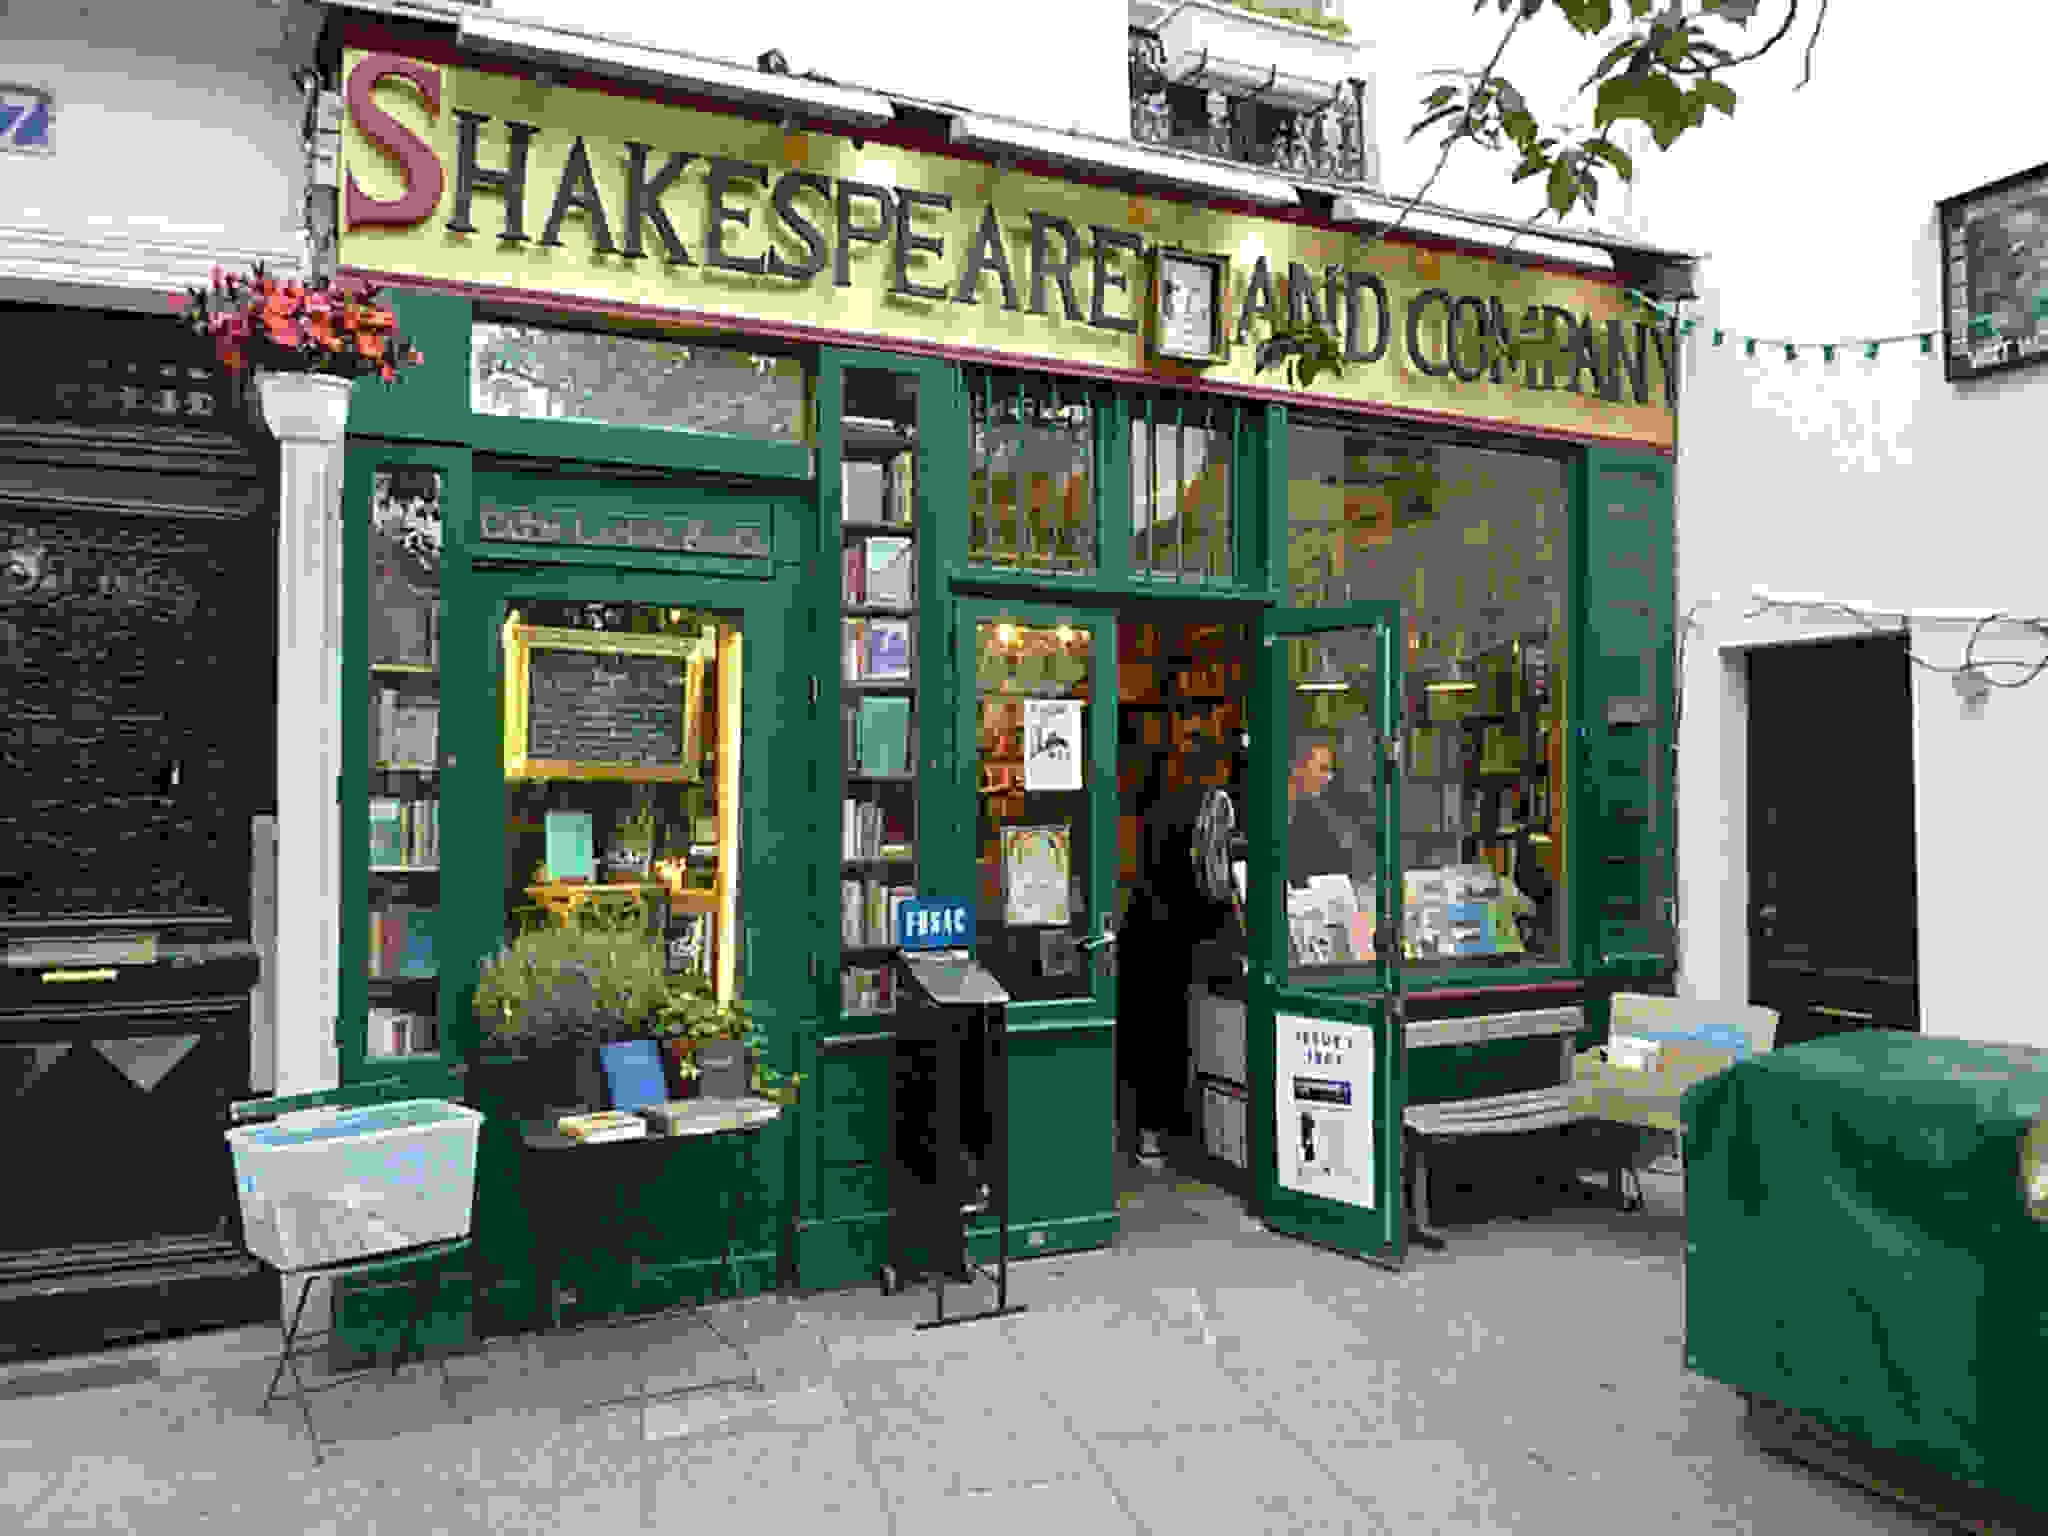 Shakespeare-and-CoParis-Bookstore.jpg